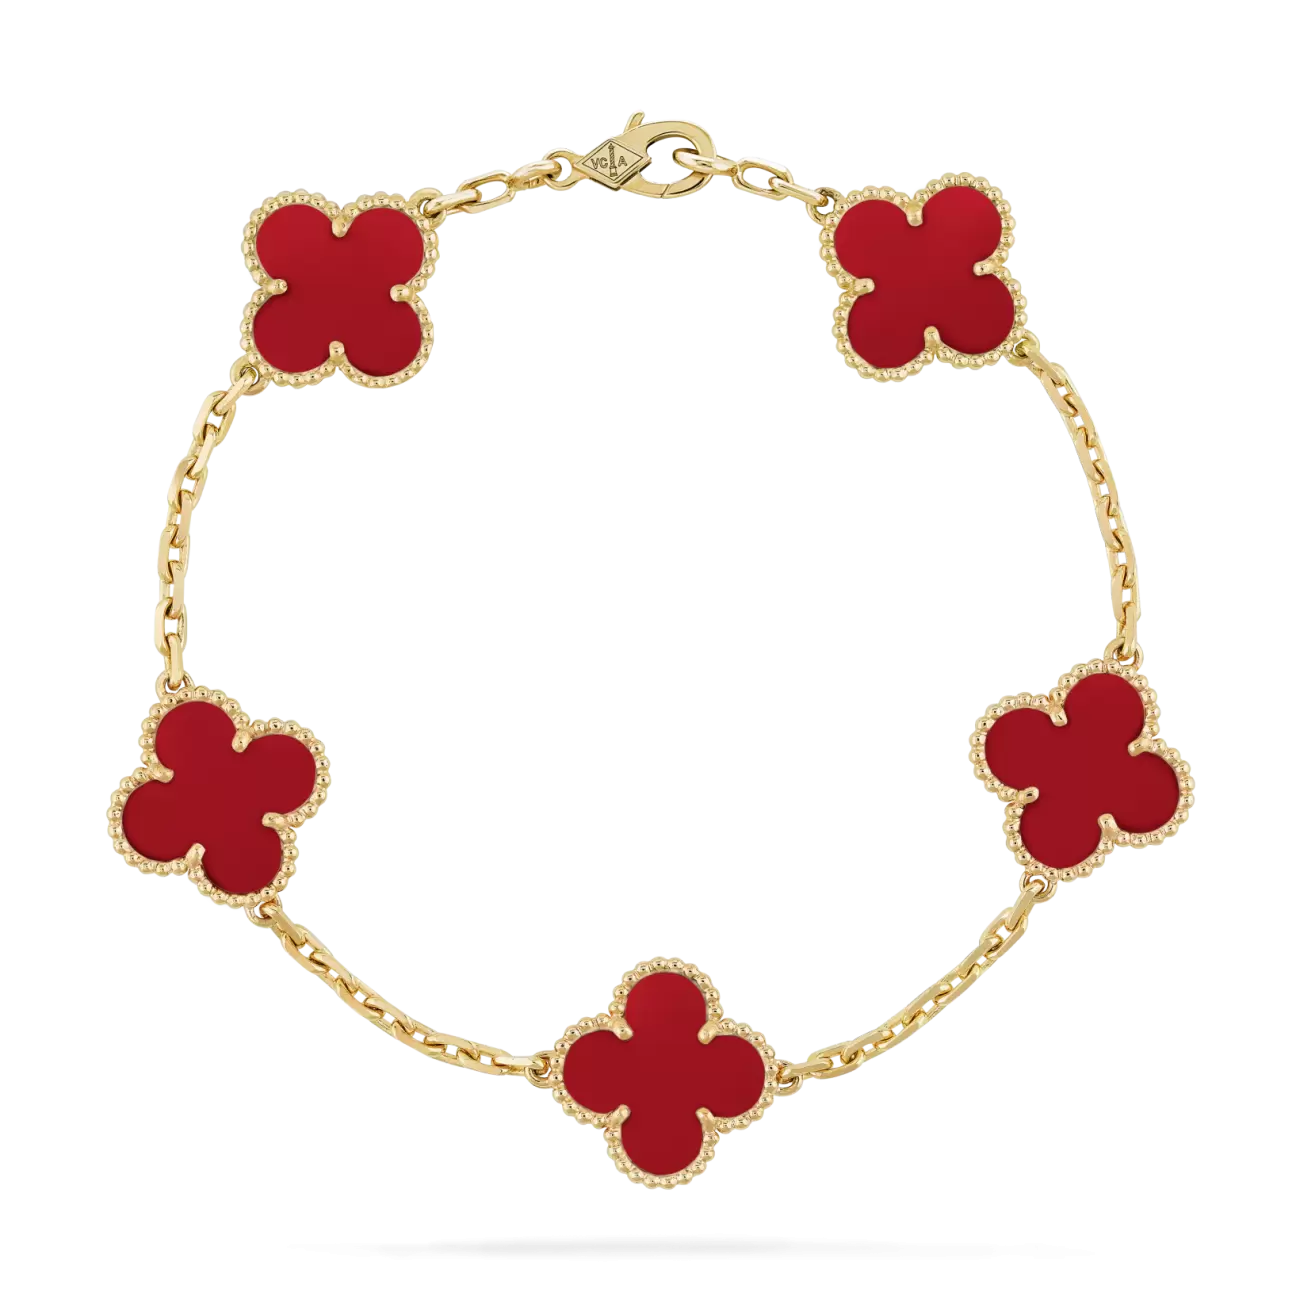 Vintage Alhambra bracelet, 5 motifs carnelian